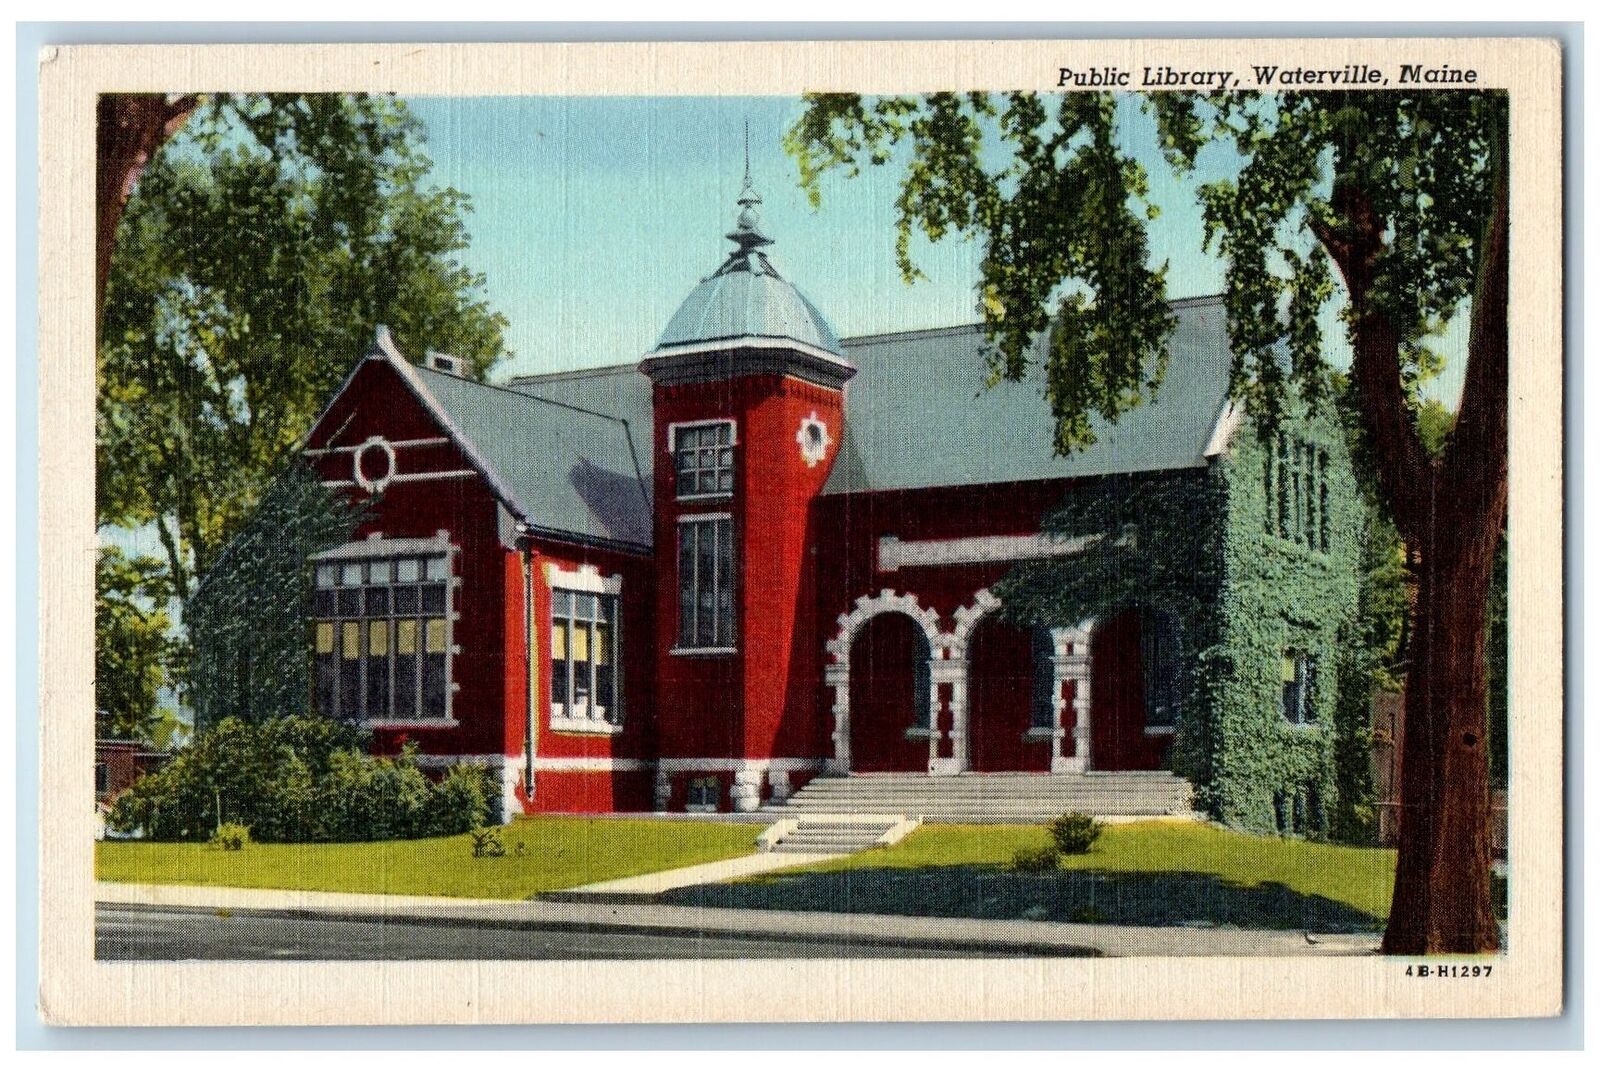 c1949 Public Library Building Facade Entrance Waterville Maine Vintage Postcard